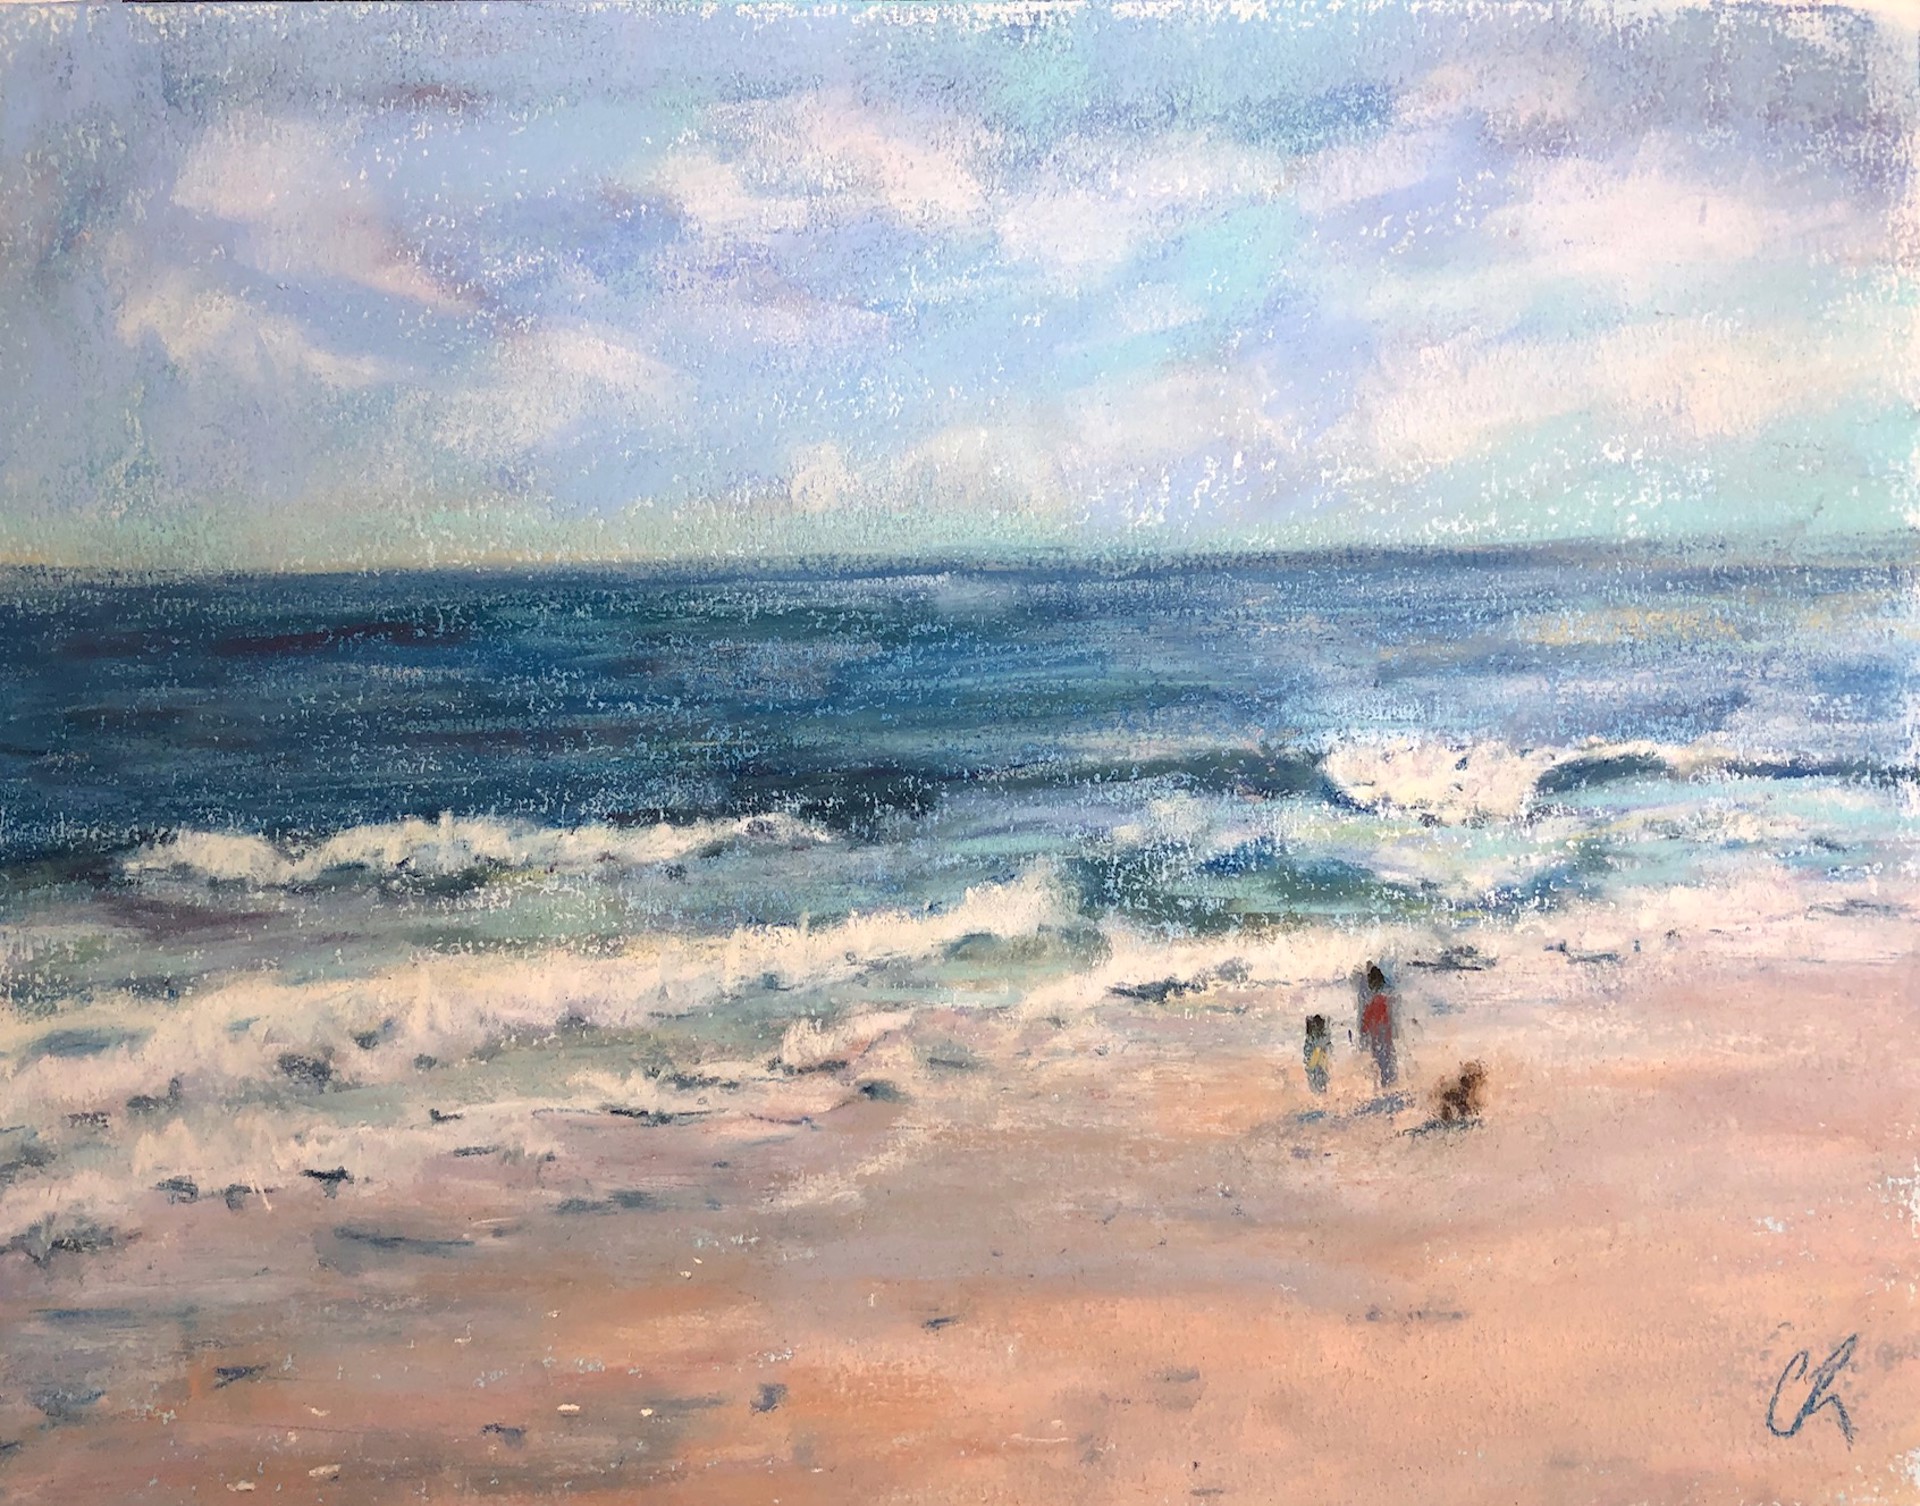 A Walk on the Beach by Carrie Ruddy